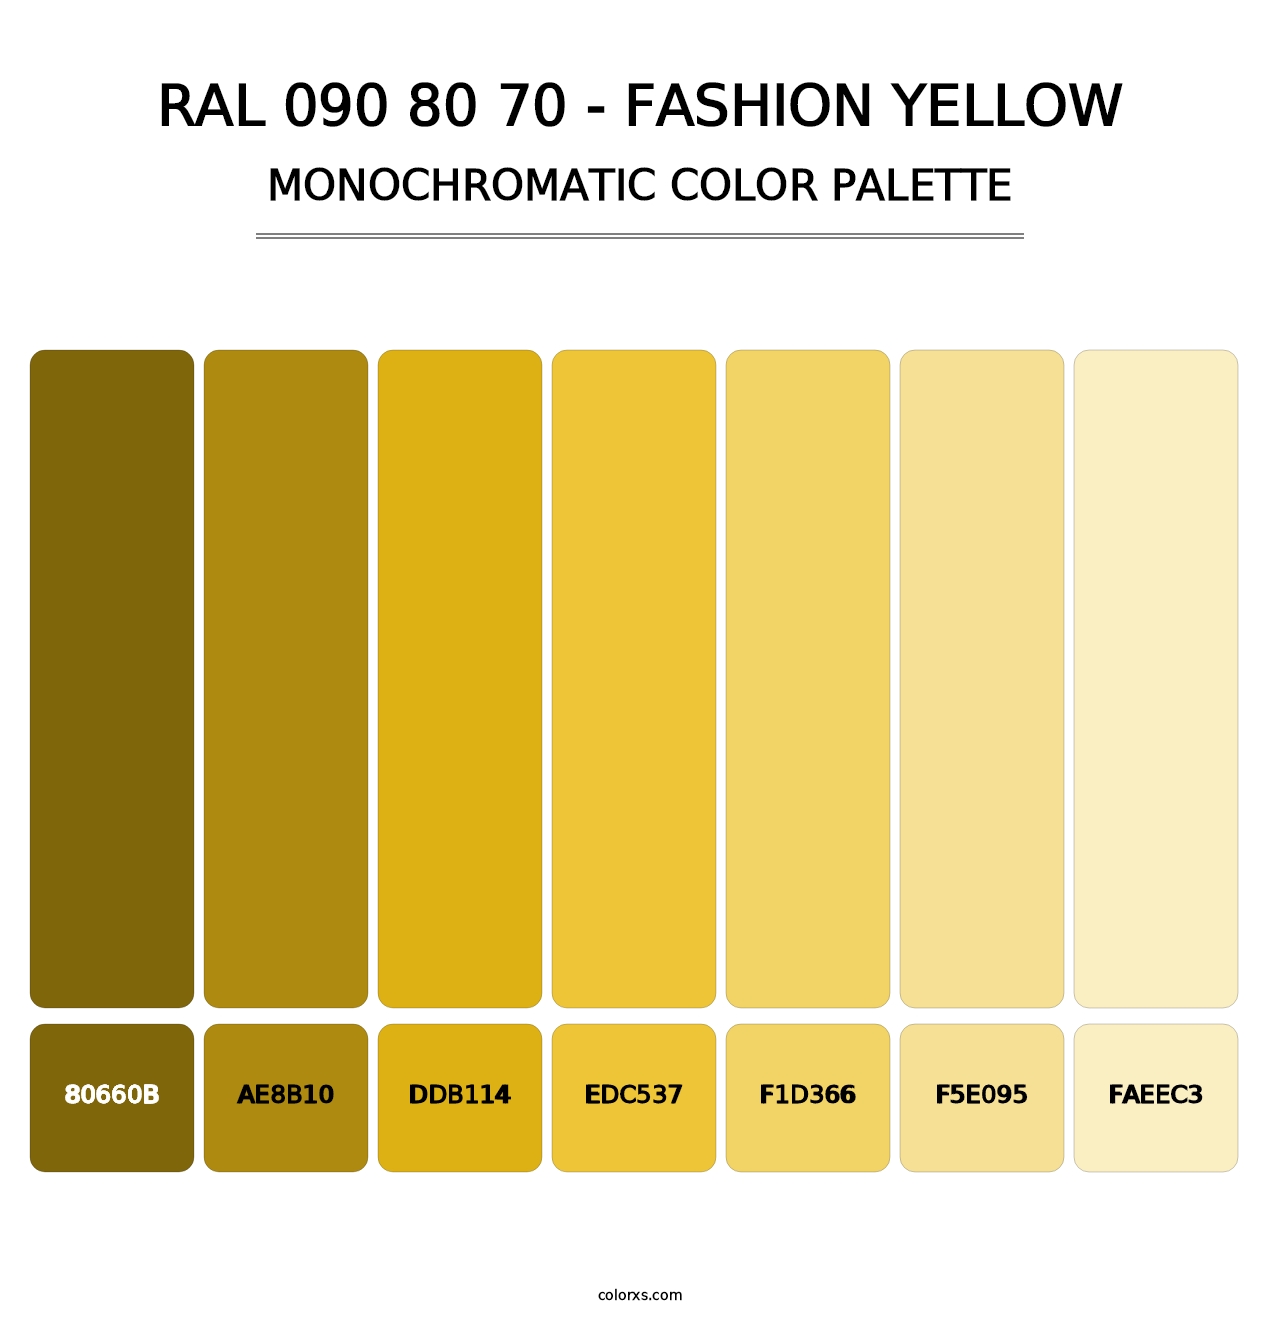 RAL 090 80 70 - Fashion Yellow - Monochromatic Color Palette